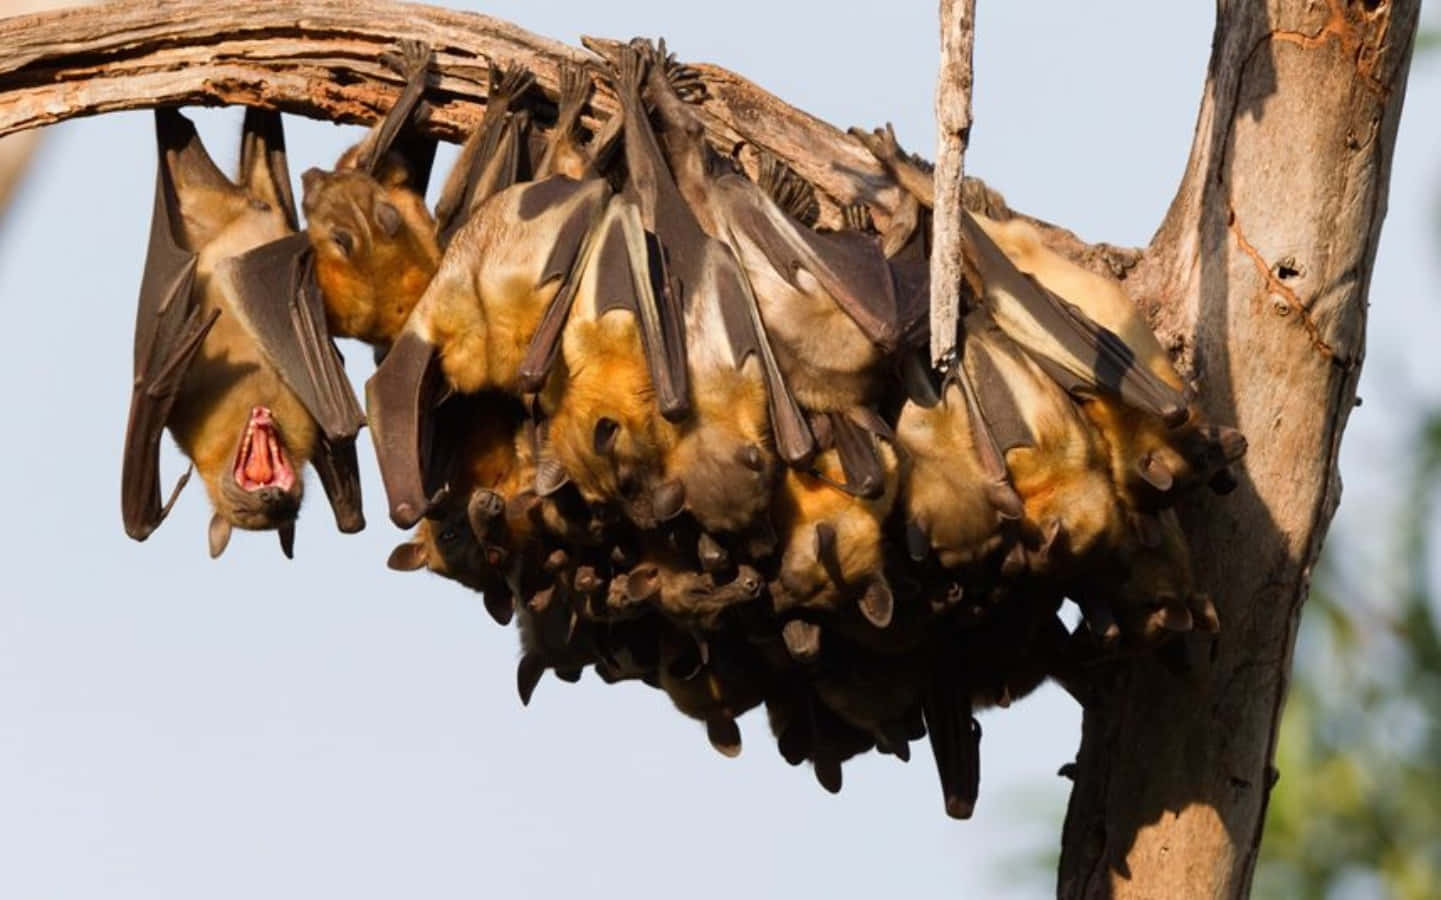 Majestic Fruit Bats in their natural habitat